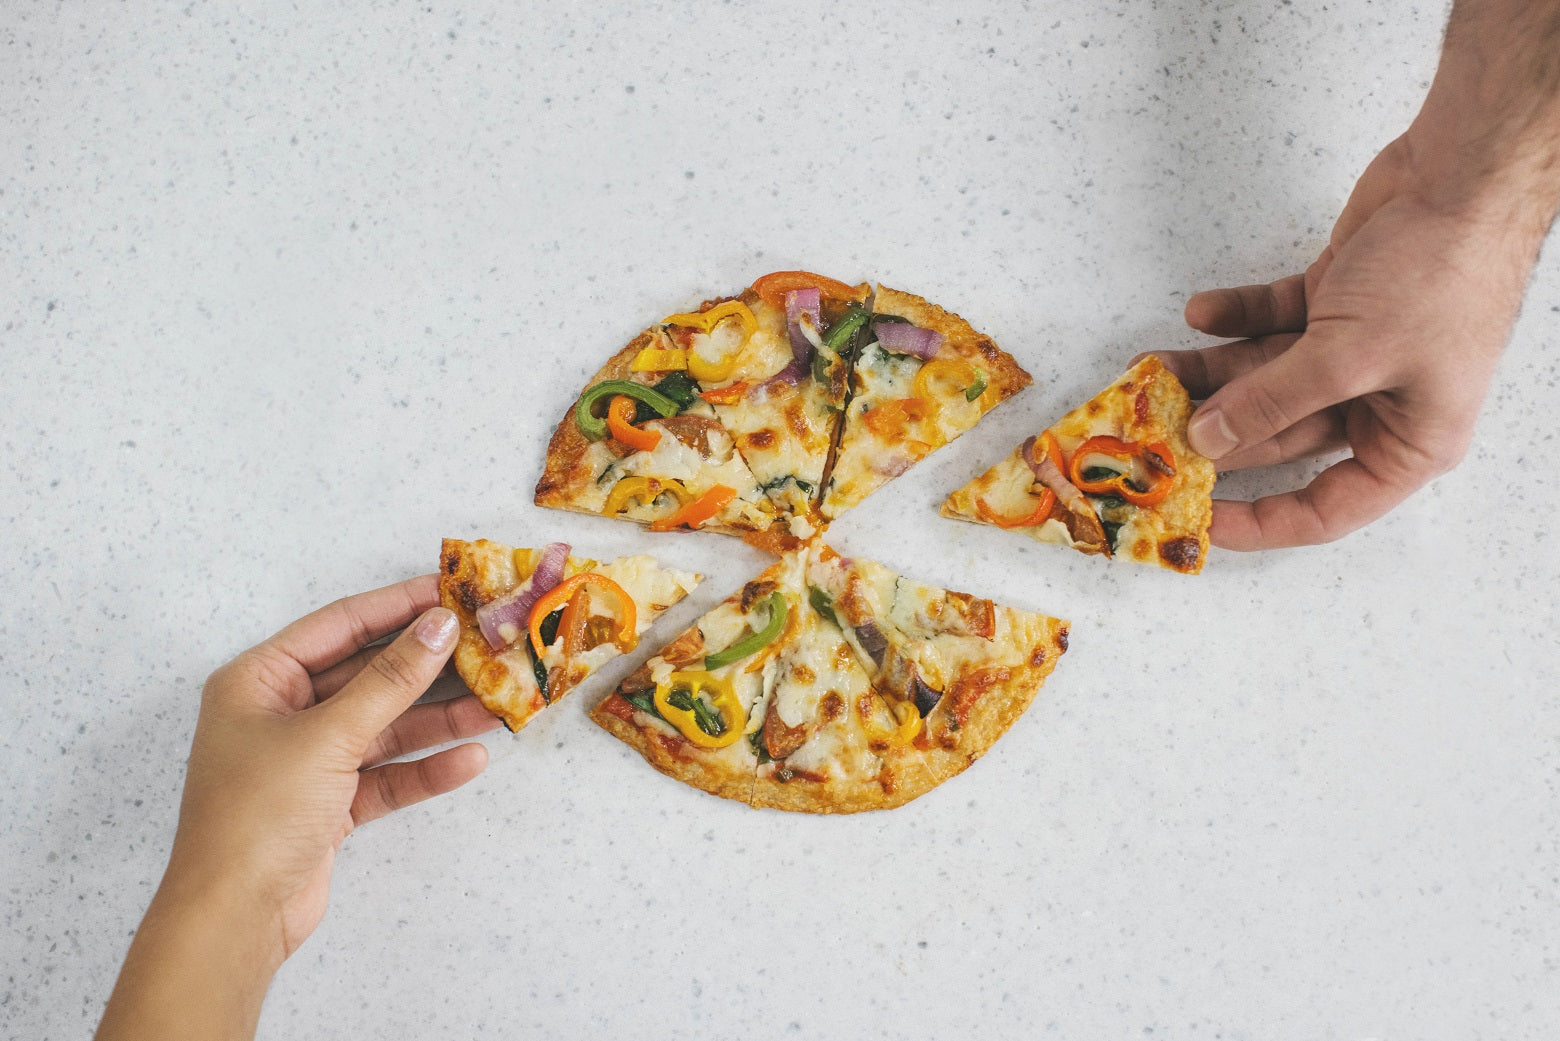 Find ZeroCarb Pizza Crusts in Your Favorite Evansville Restaurants